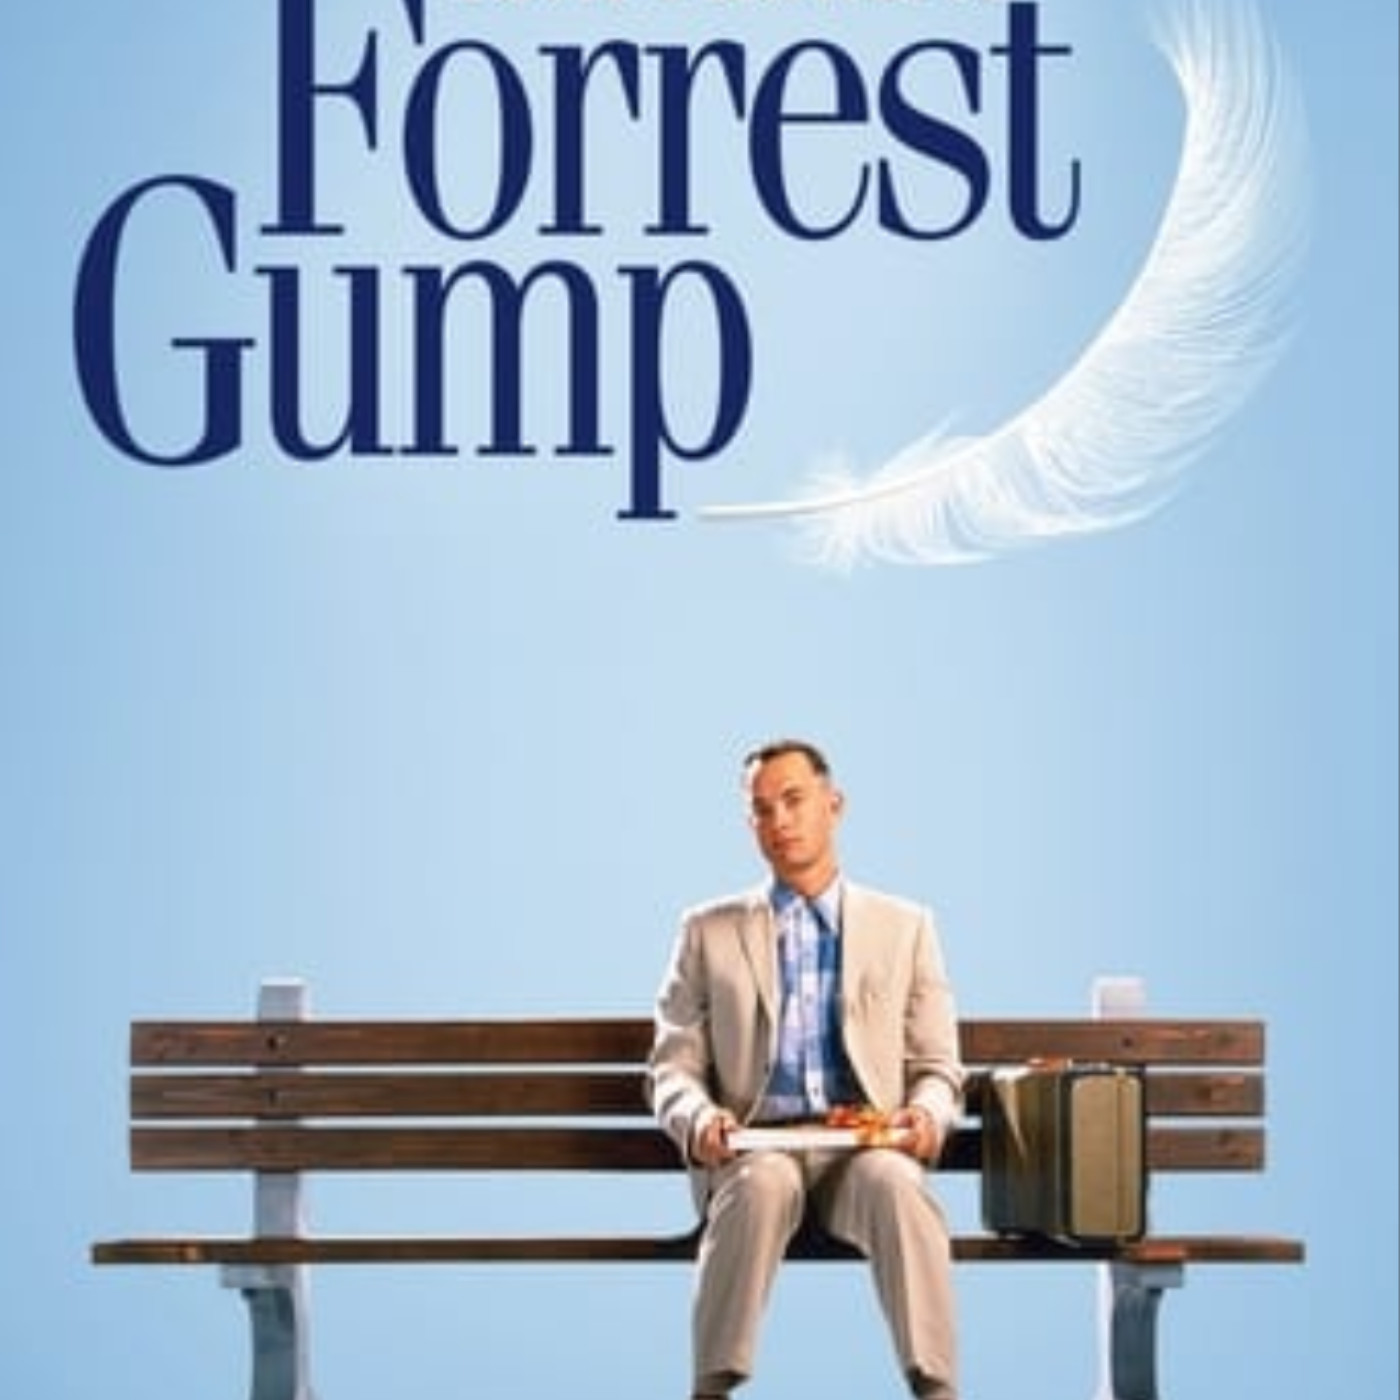 WEB-DL] Forrest Gump pelicula completa en español gratis Gnula | Podcast on  SoundOn